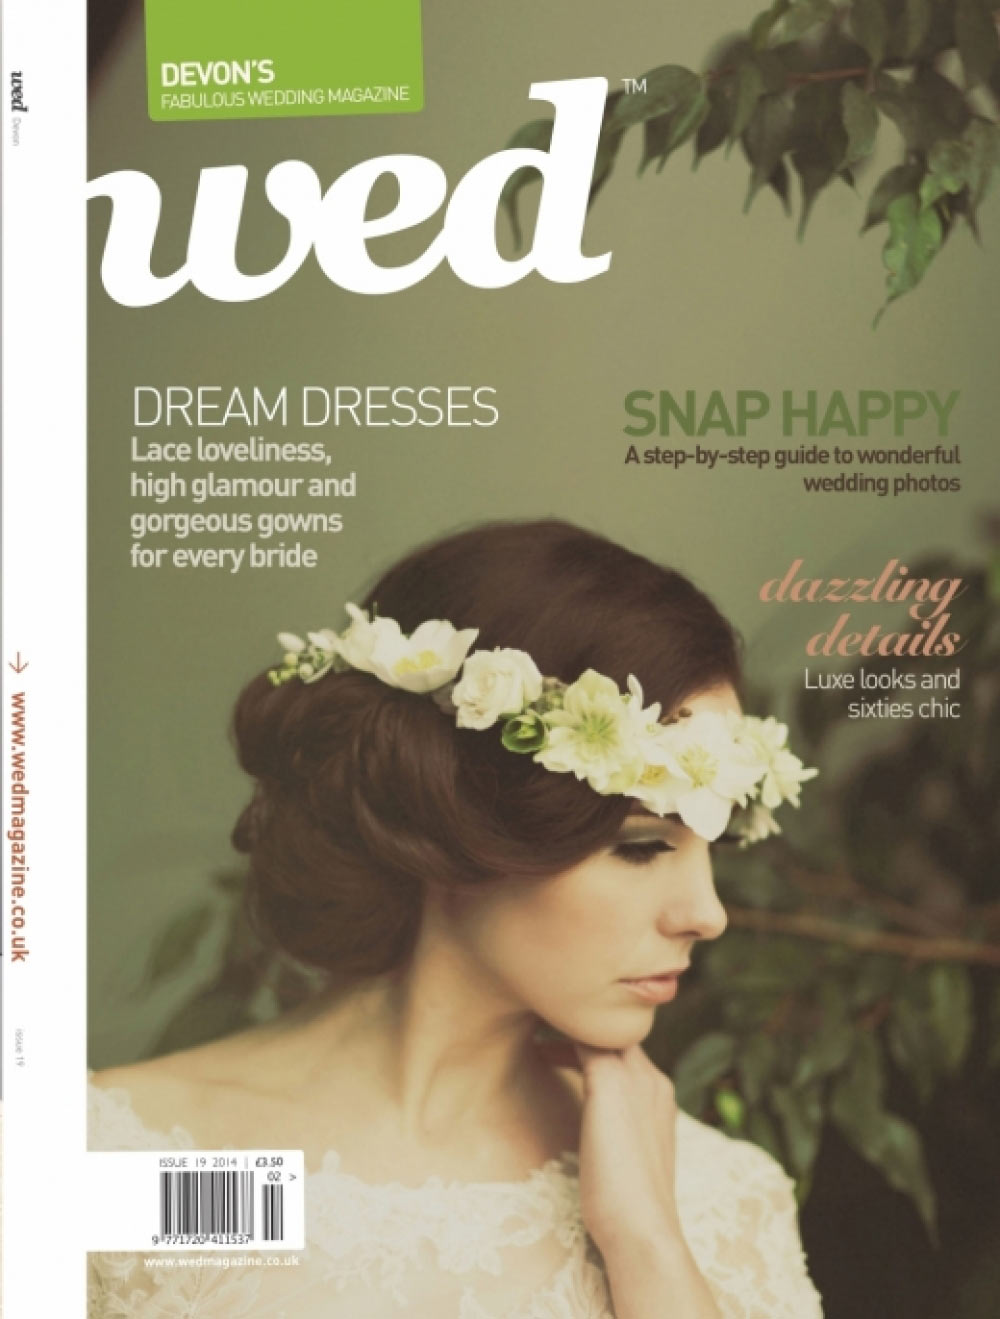 Get the latest issue of Devon's fabulous wedding magazine!